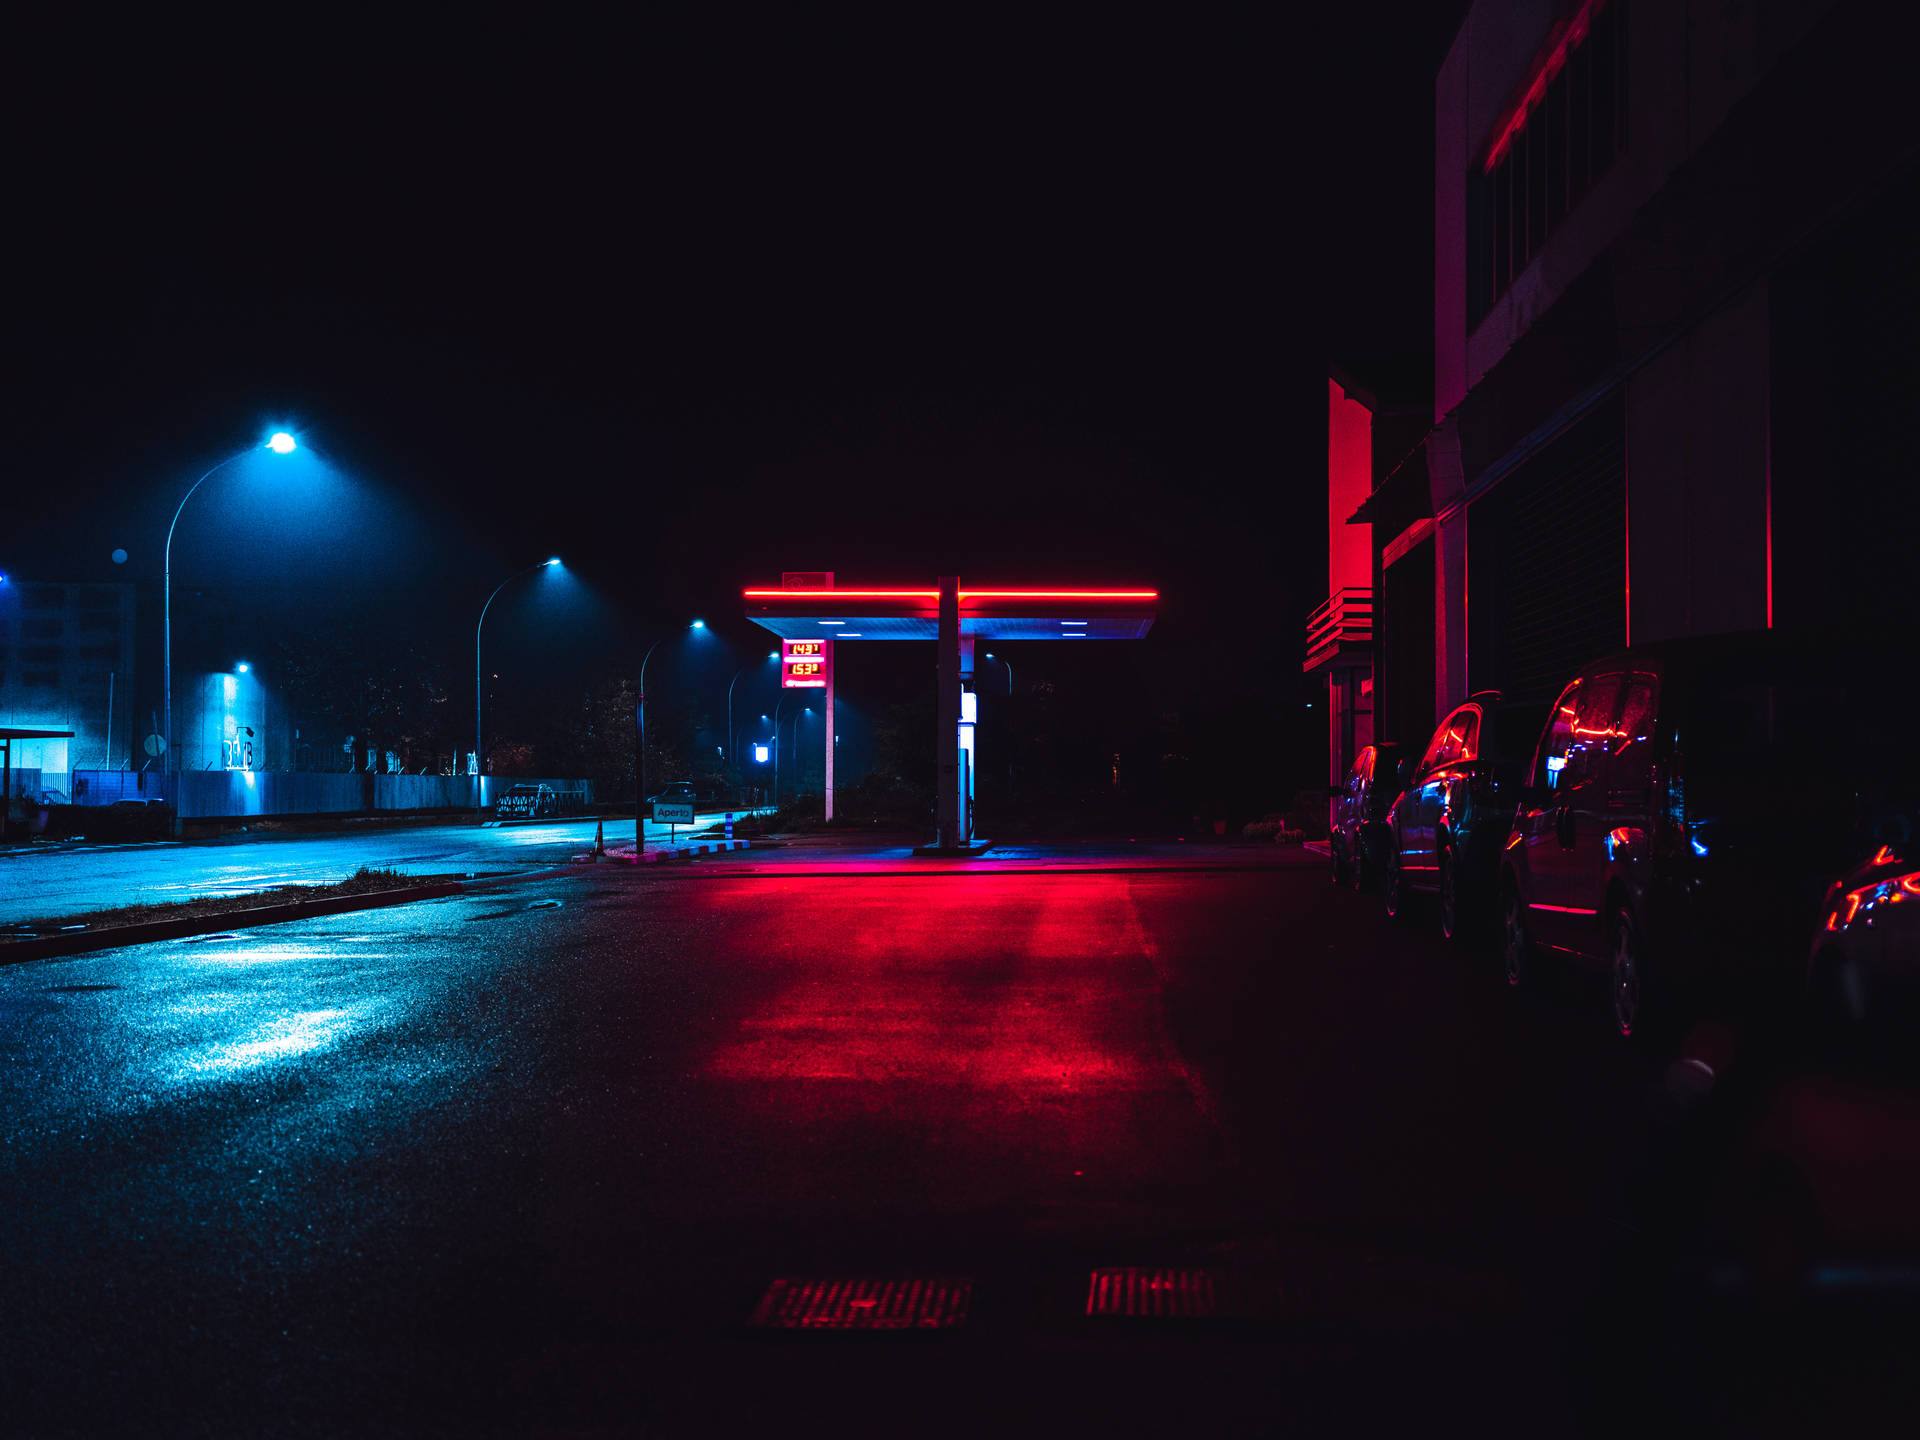 City Gasoline Station Neon Light Wallpaper